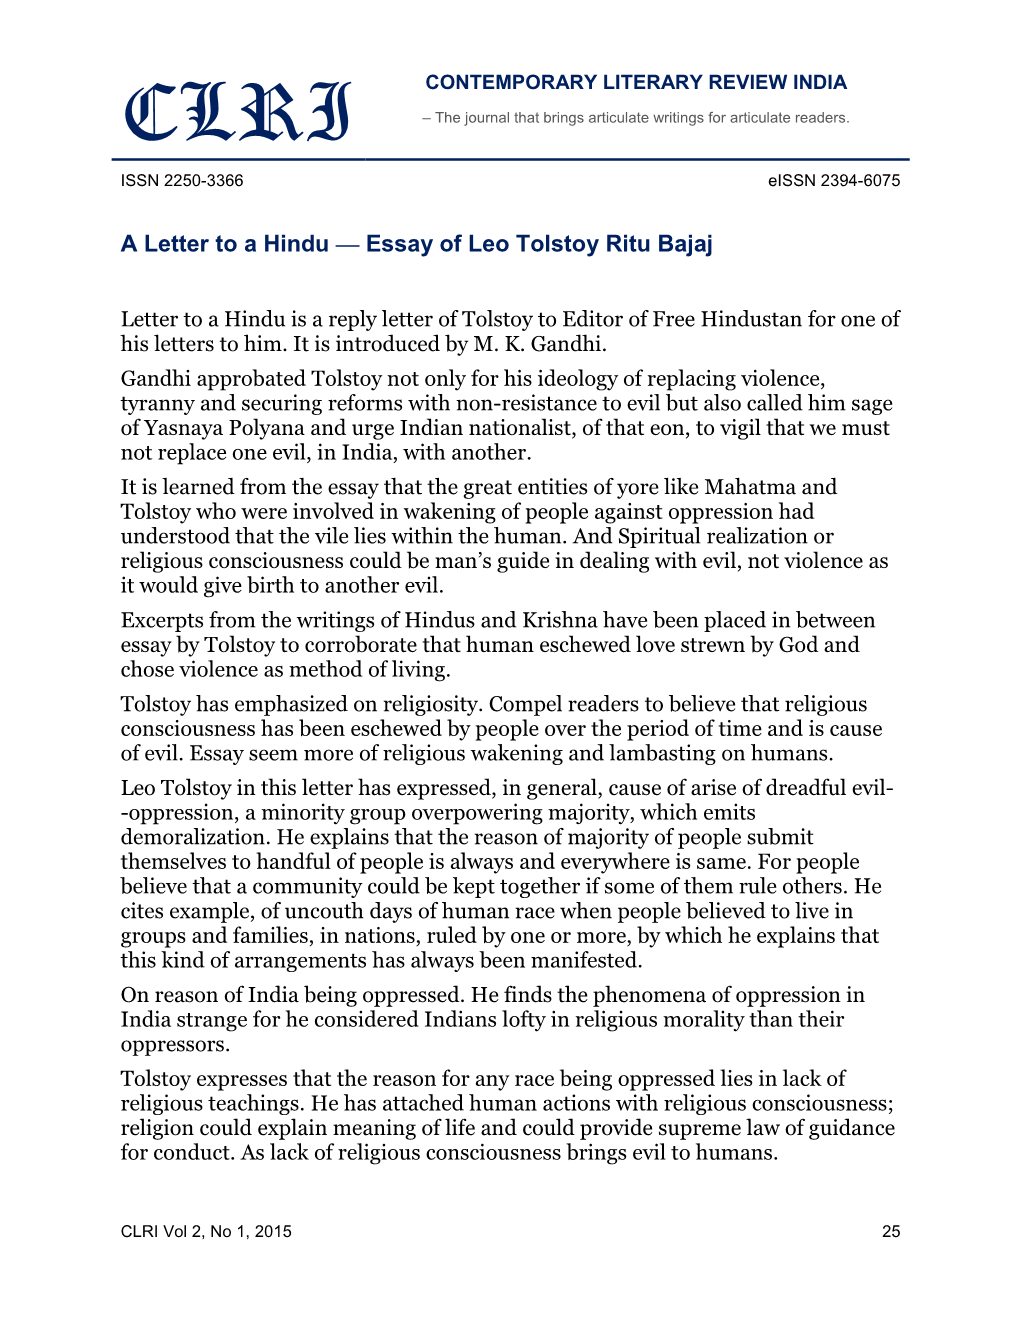 A Letter to a Hindu — Essay of Leo Tolstoy Ritu Bajaj